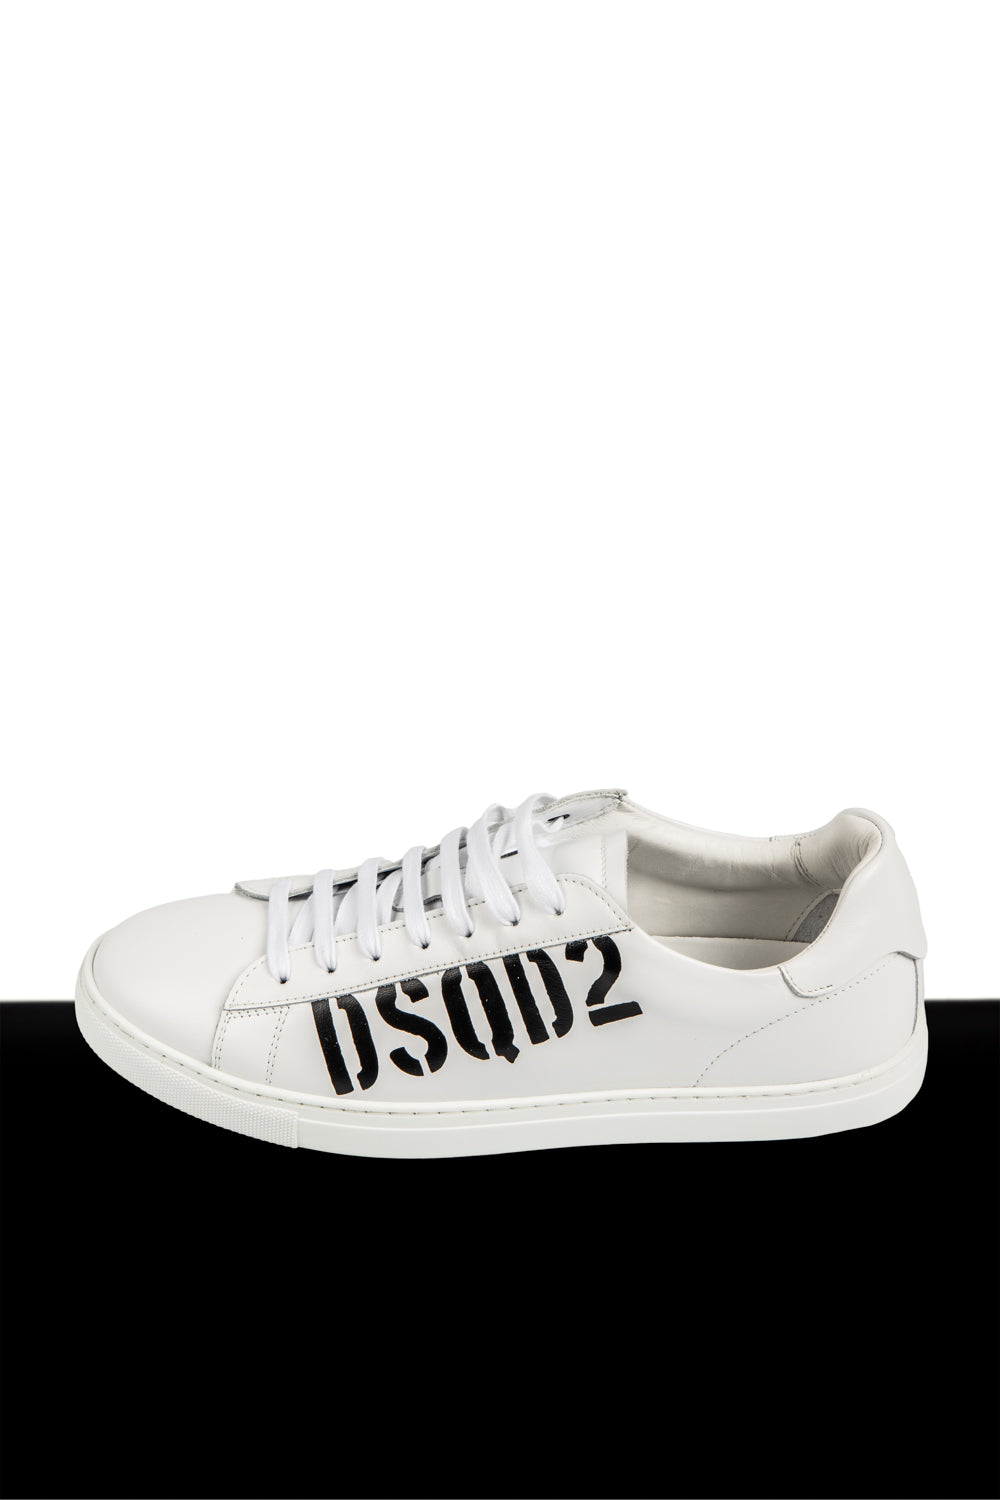 Sneakers dsquared logo  DSQD2